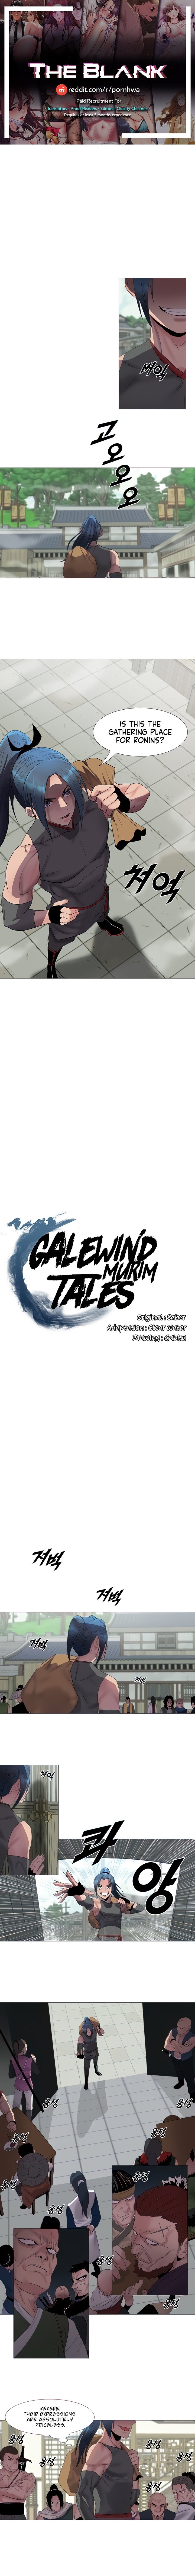 galewind-murim-tales-chap-7-0